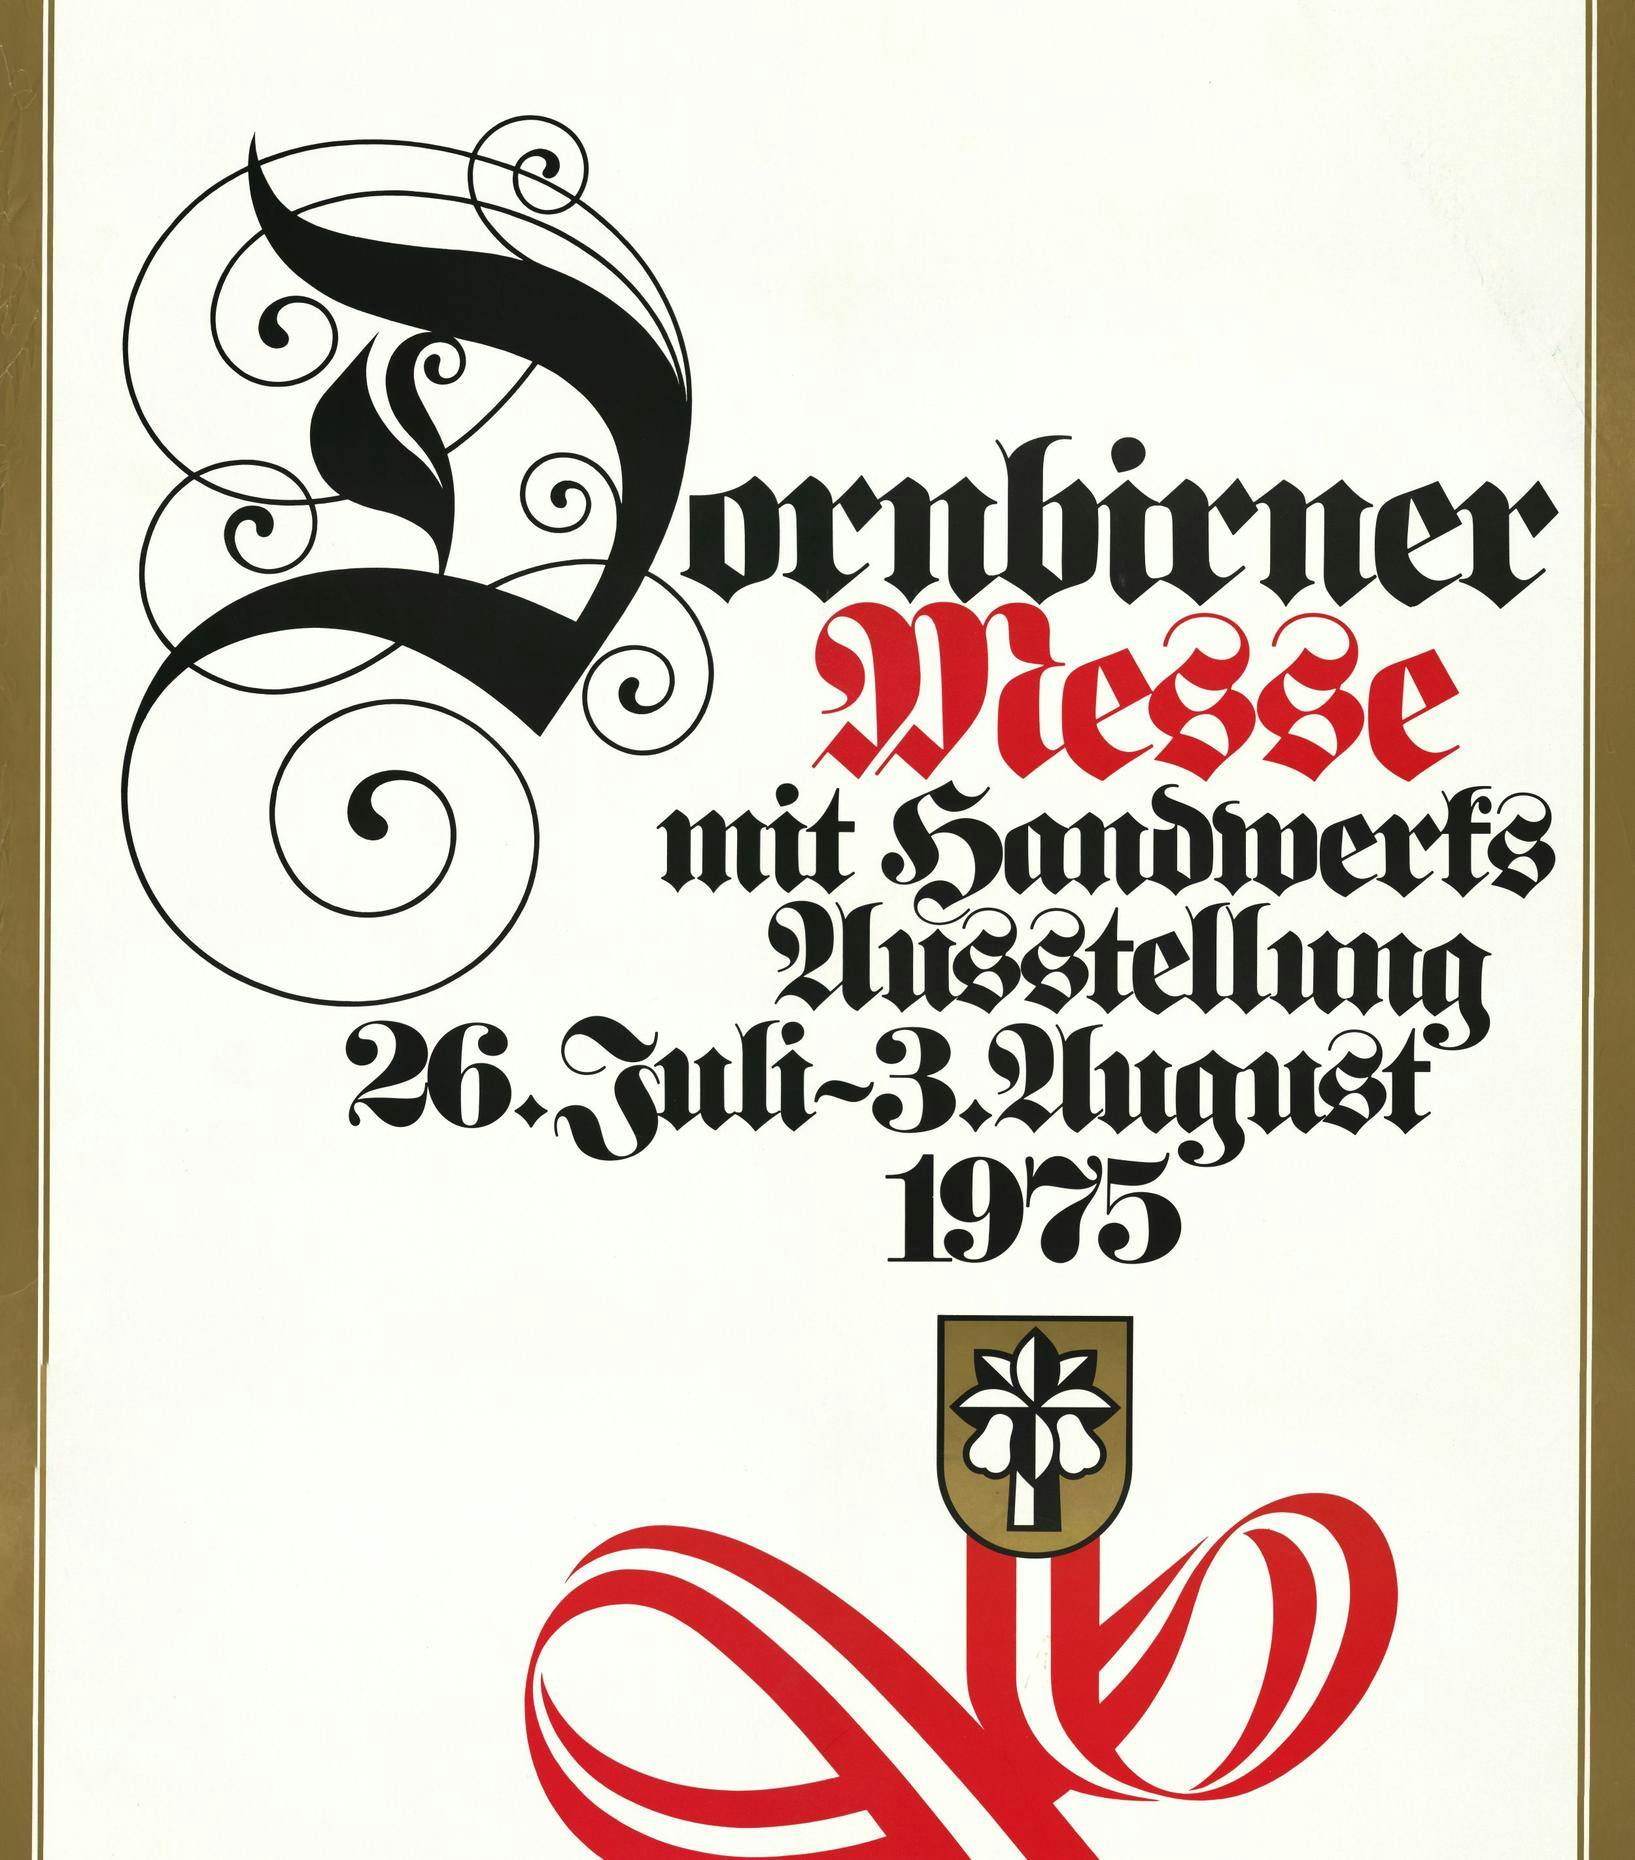 Messe Dornbirn 1975 © Messe Dornbirn